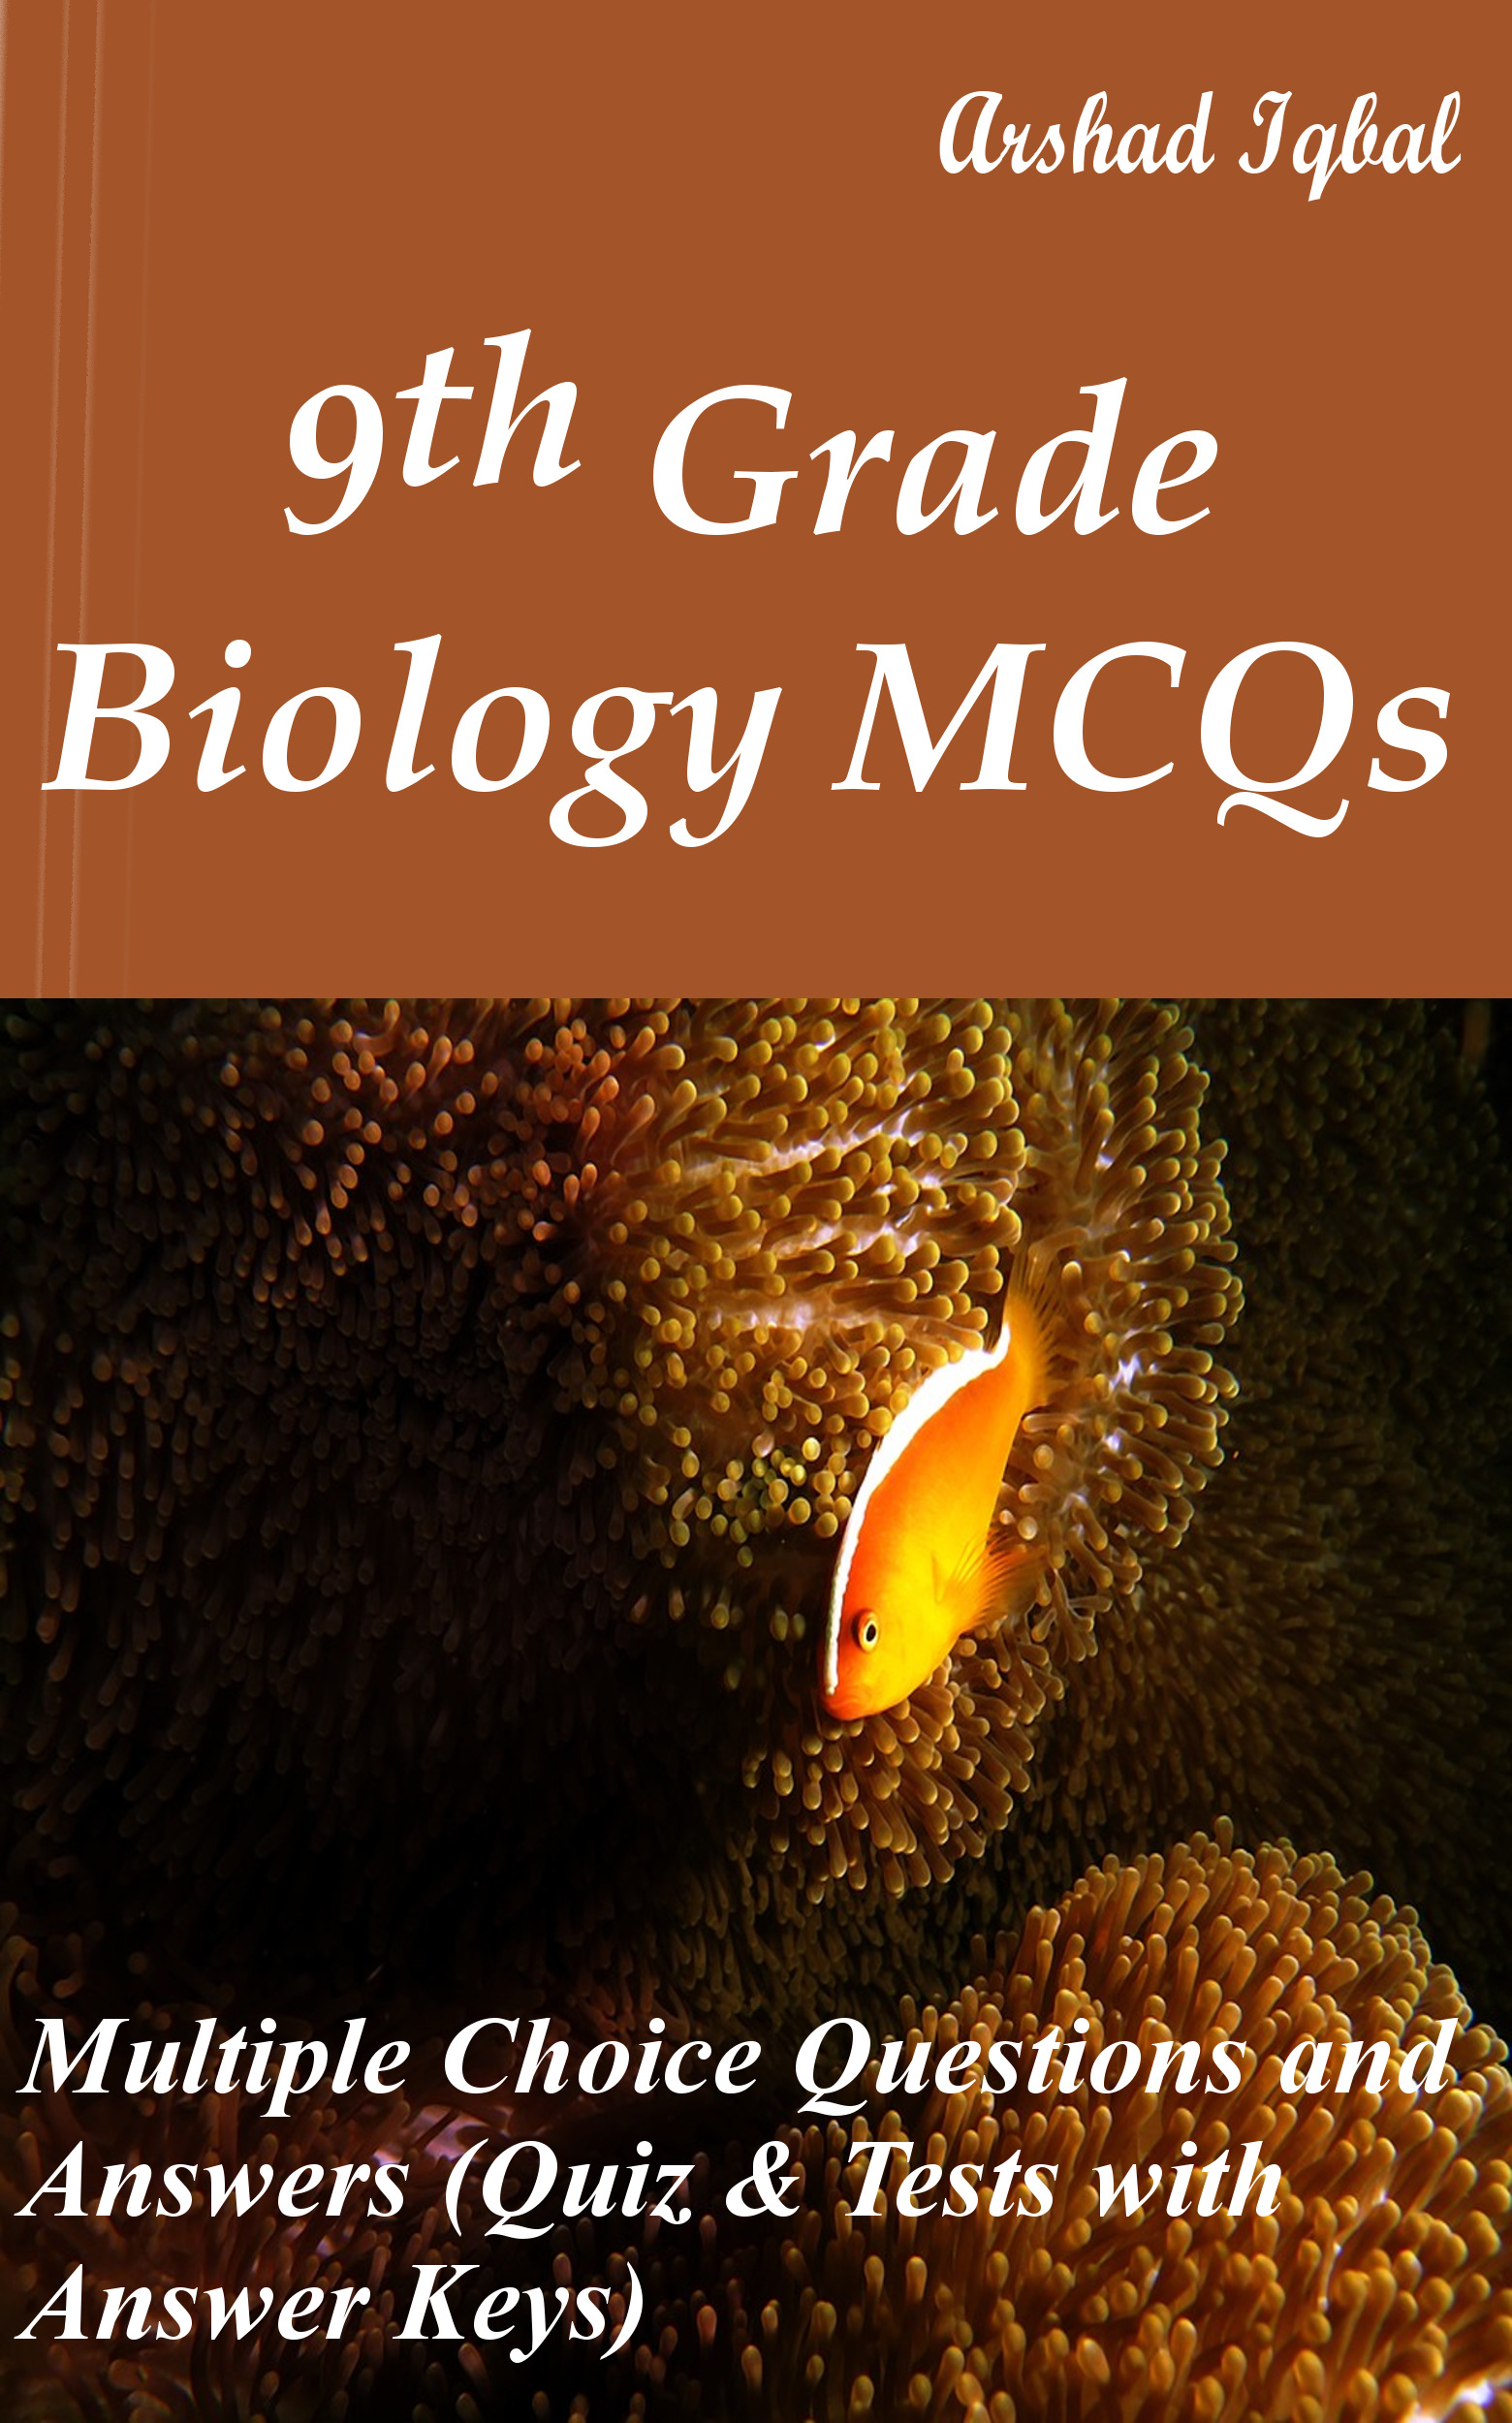 9th Grade Biology Book PDF